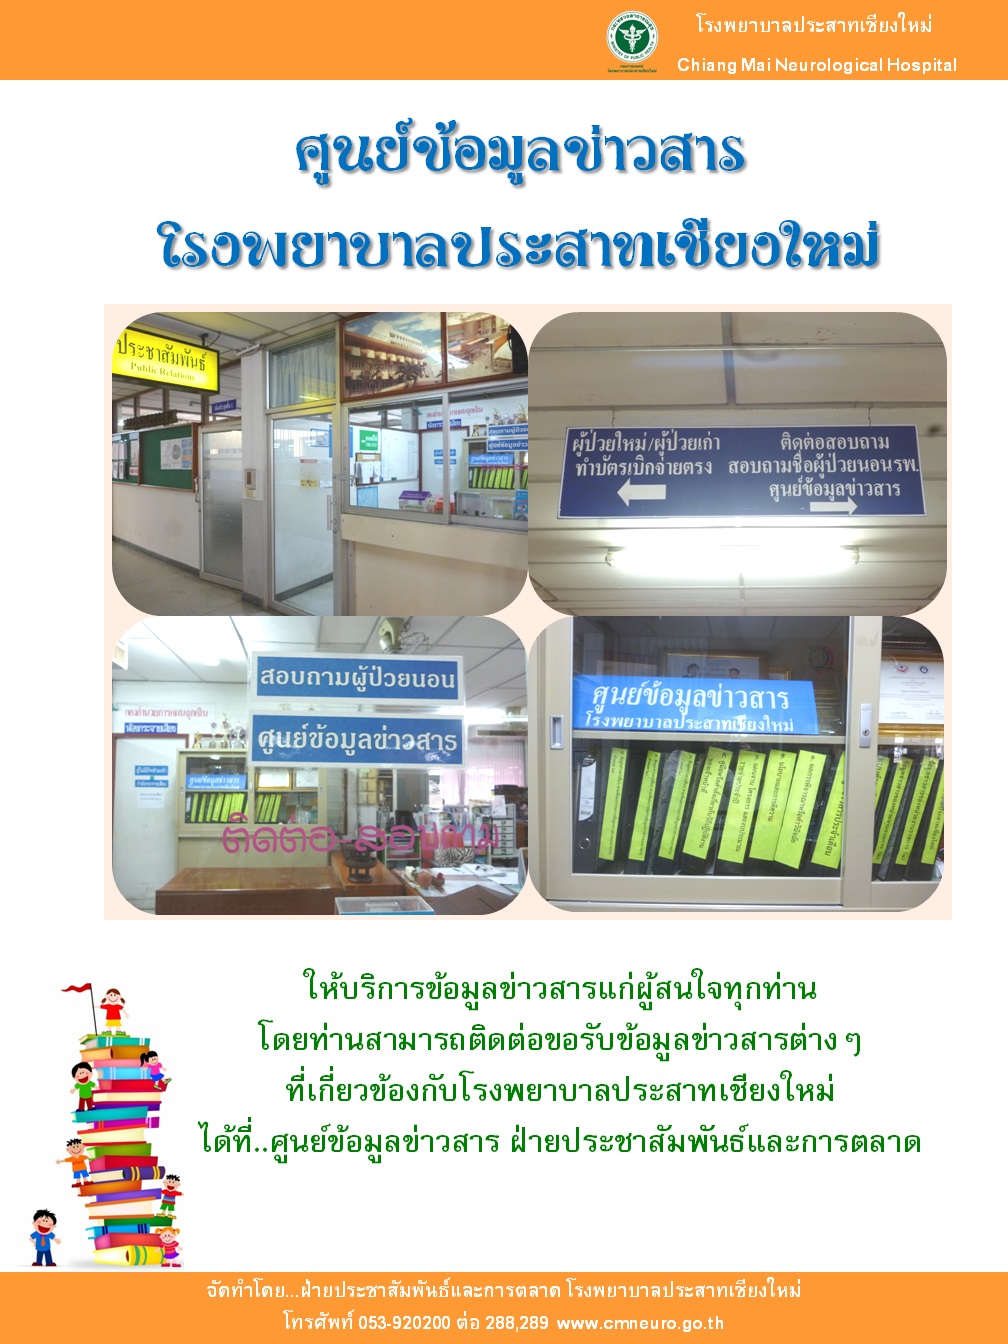 Information center poster